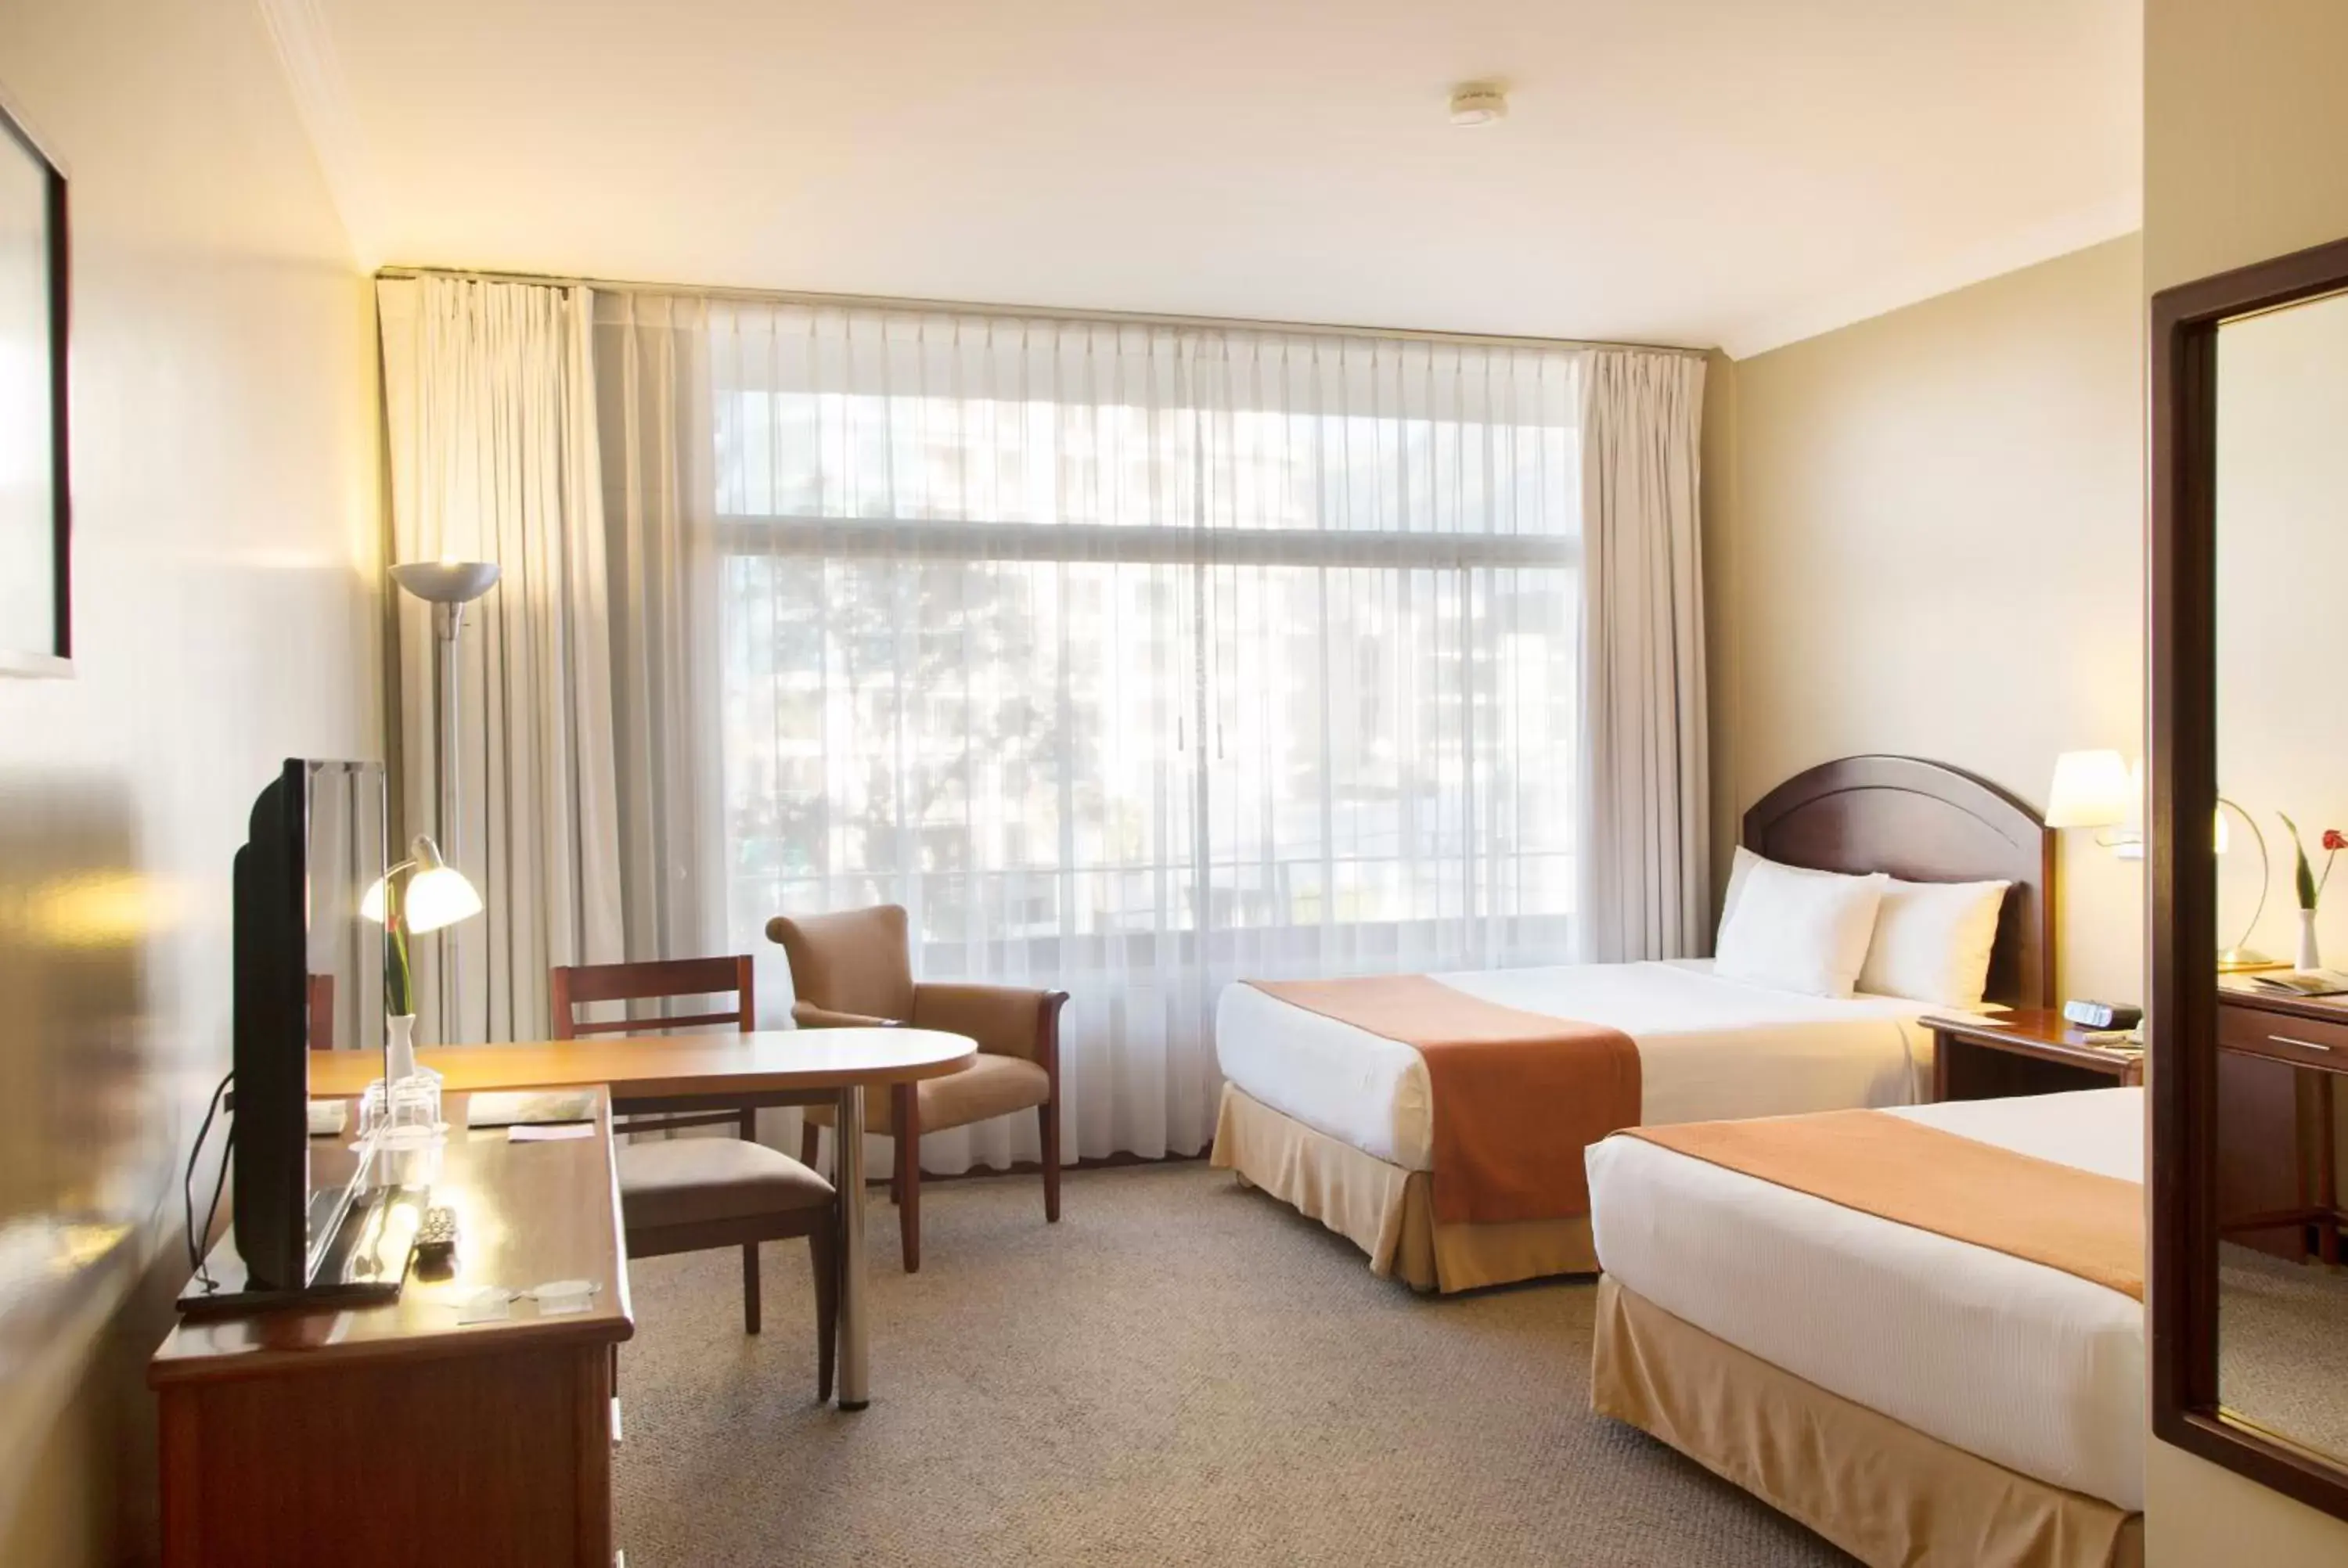 Superior Twin Room in Hotel Quito